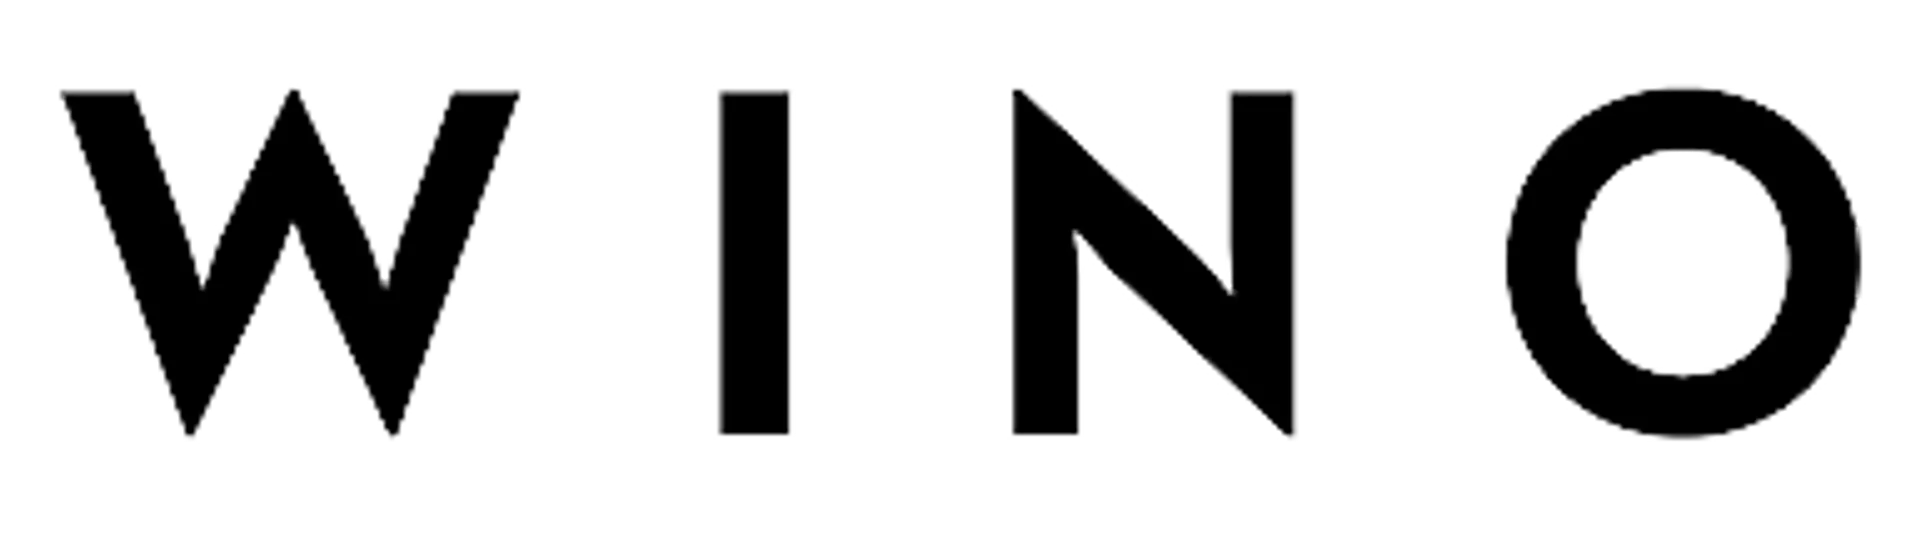 WINO logo de circulaires